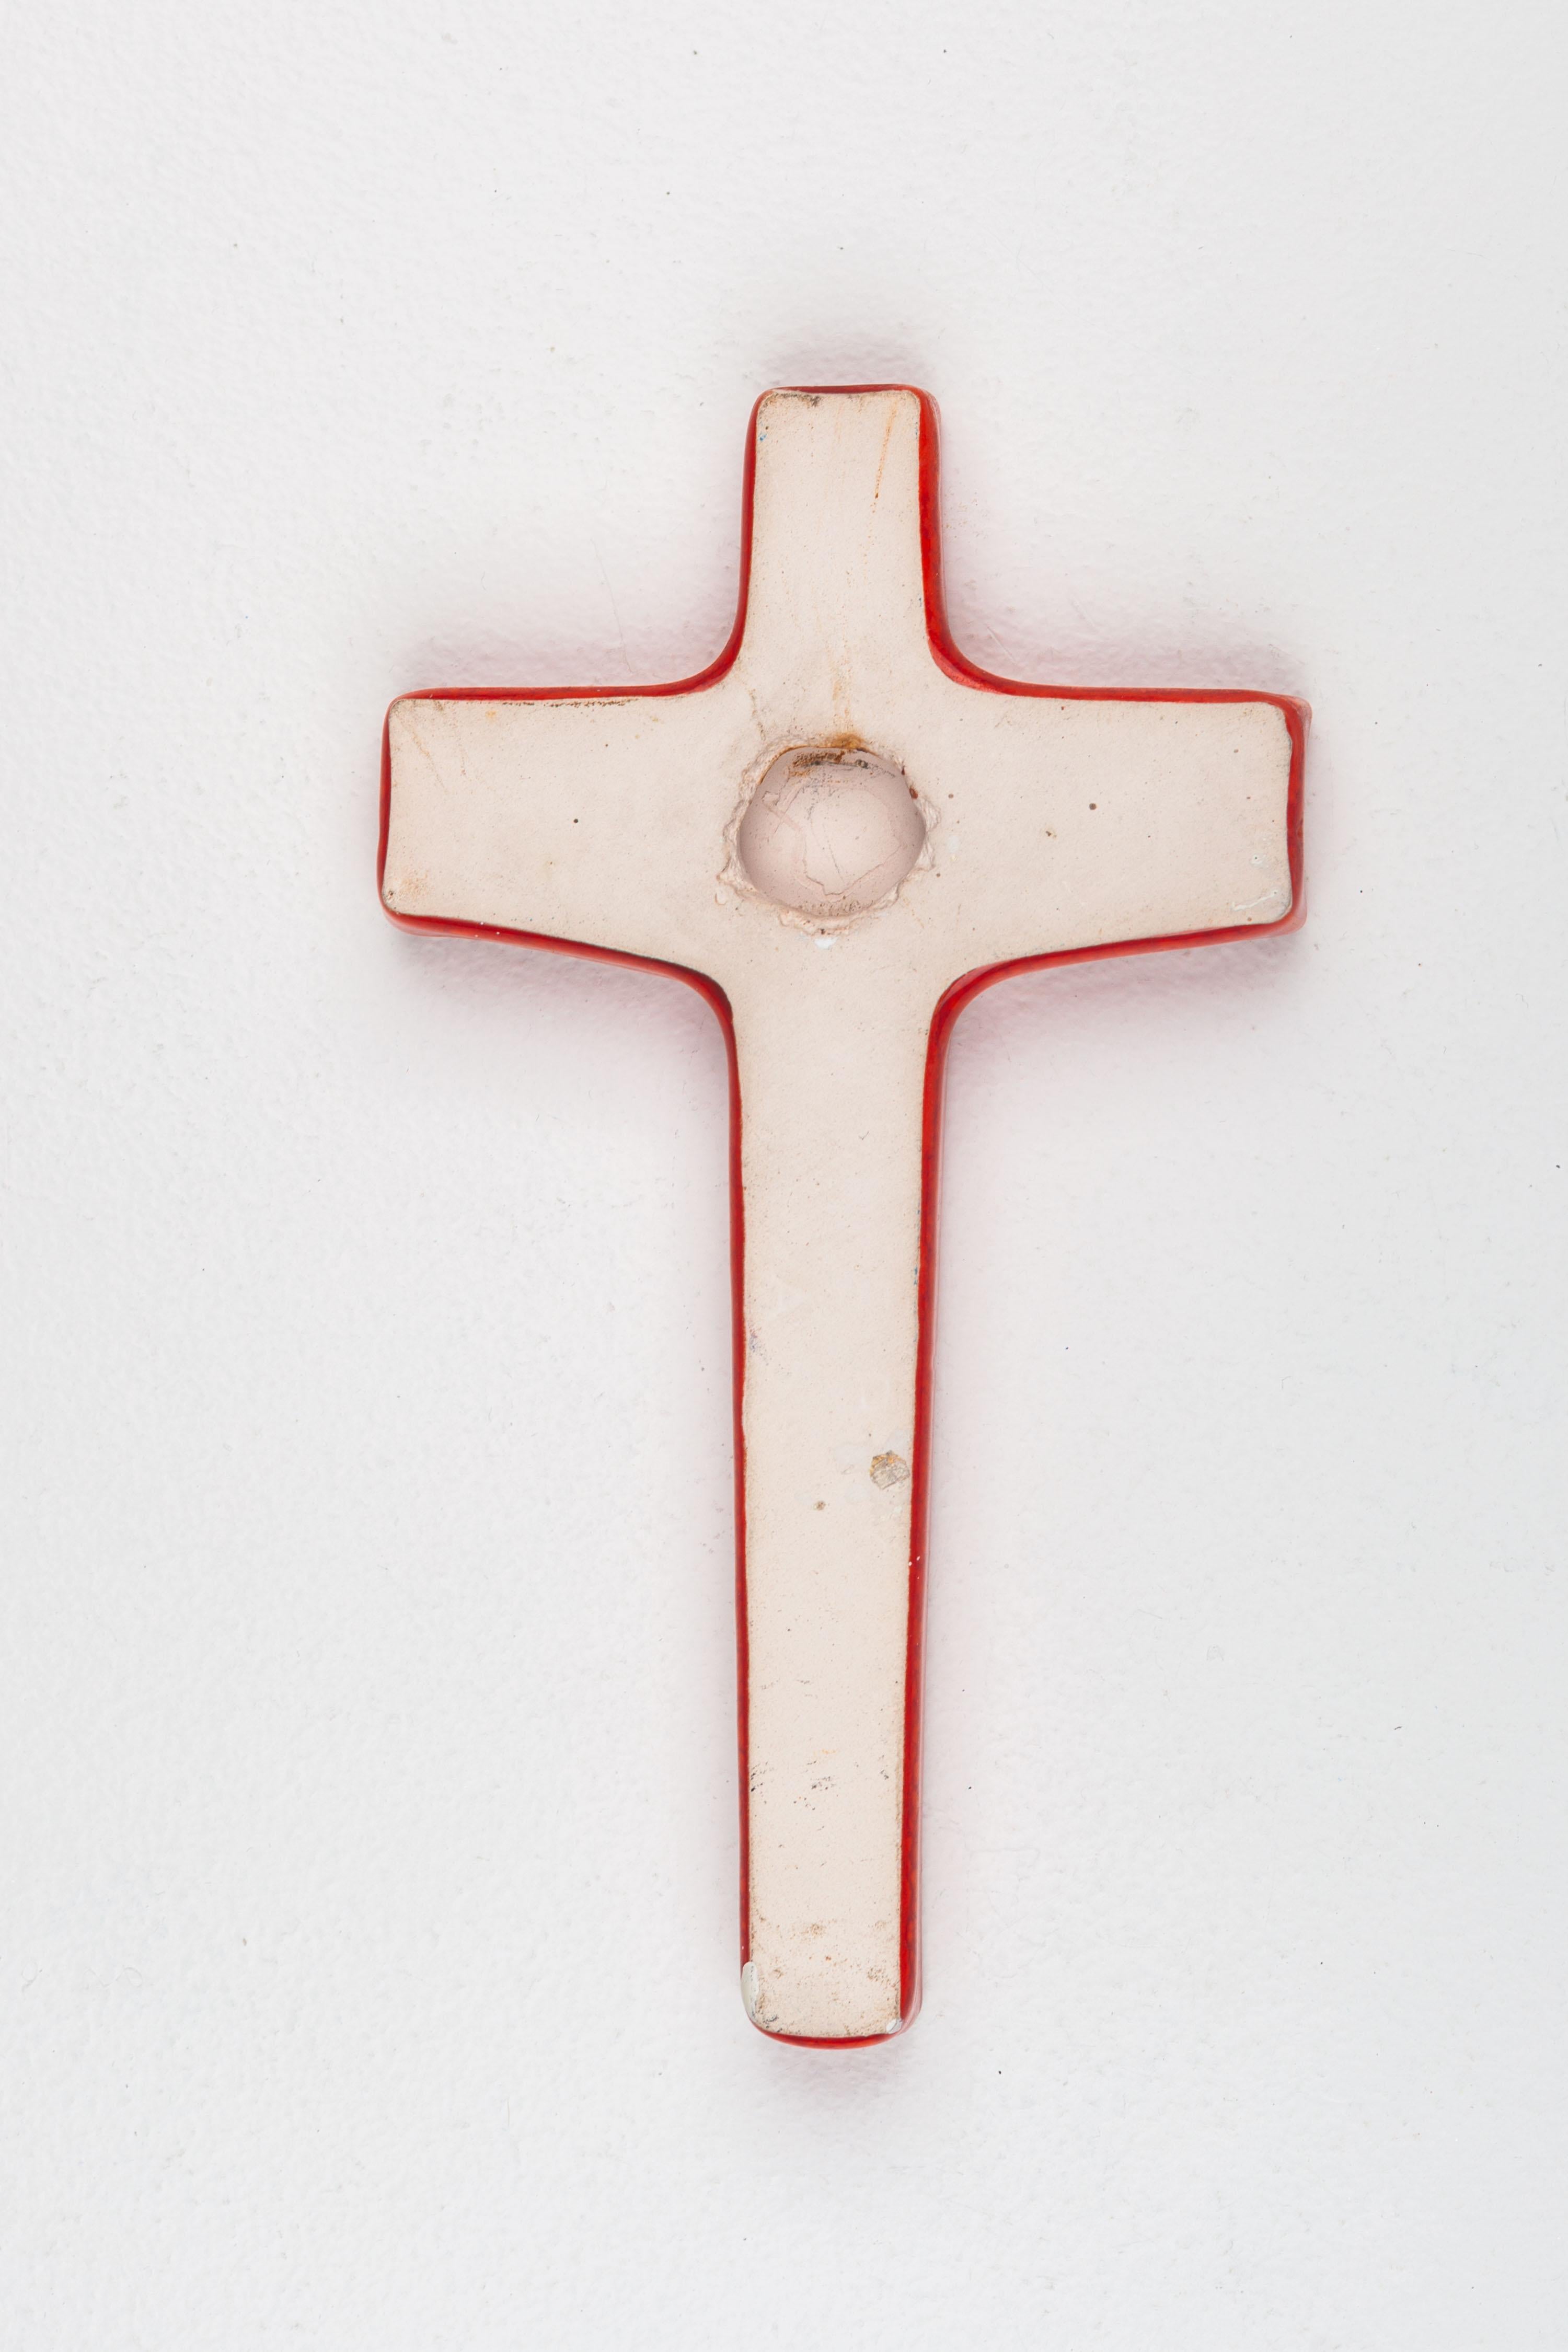 Ceramic Bright Orange Glossy Cross, Abstract Christ Figure, Modernist Religious Art For Sale